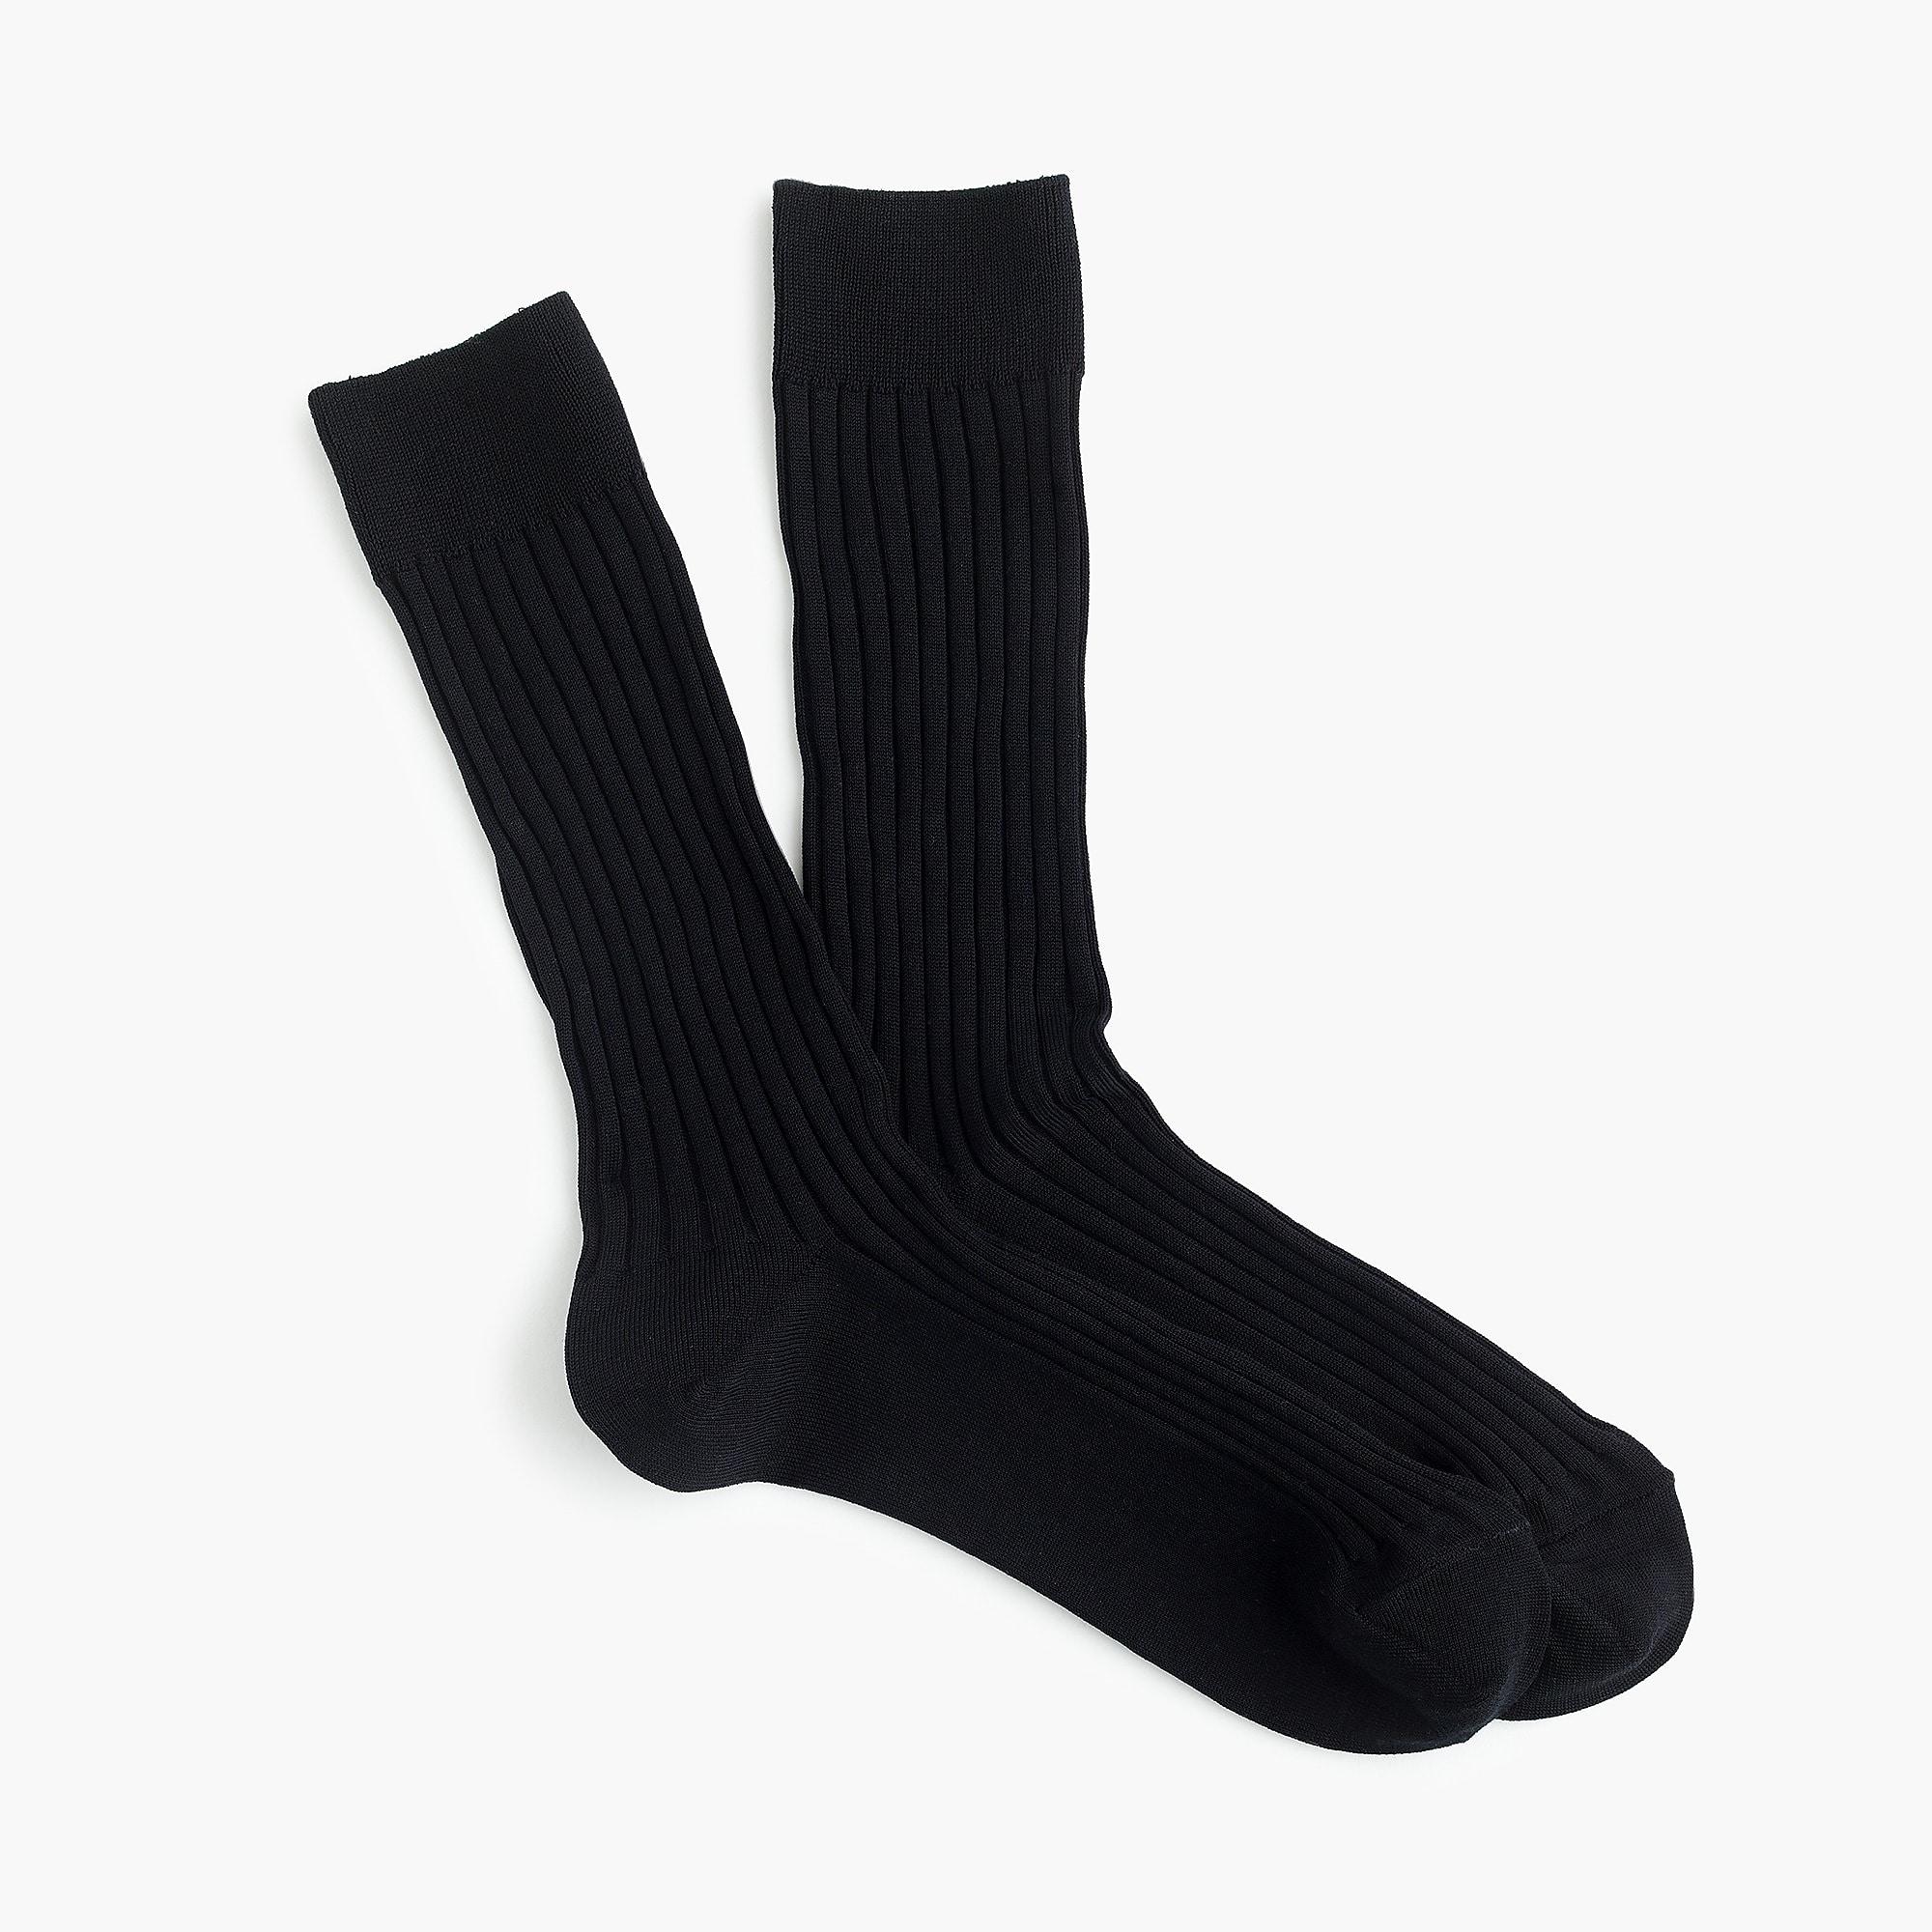 J.Crew Cotton Ribbed Dress Socks in Black for Men - Lyst